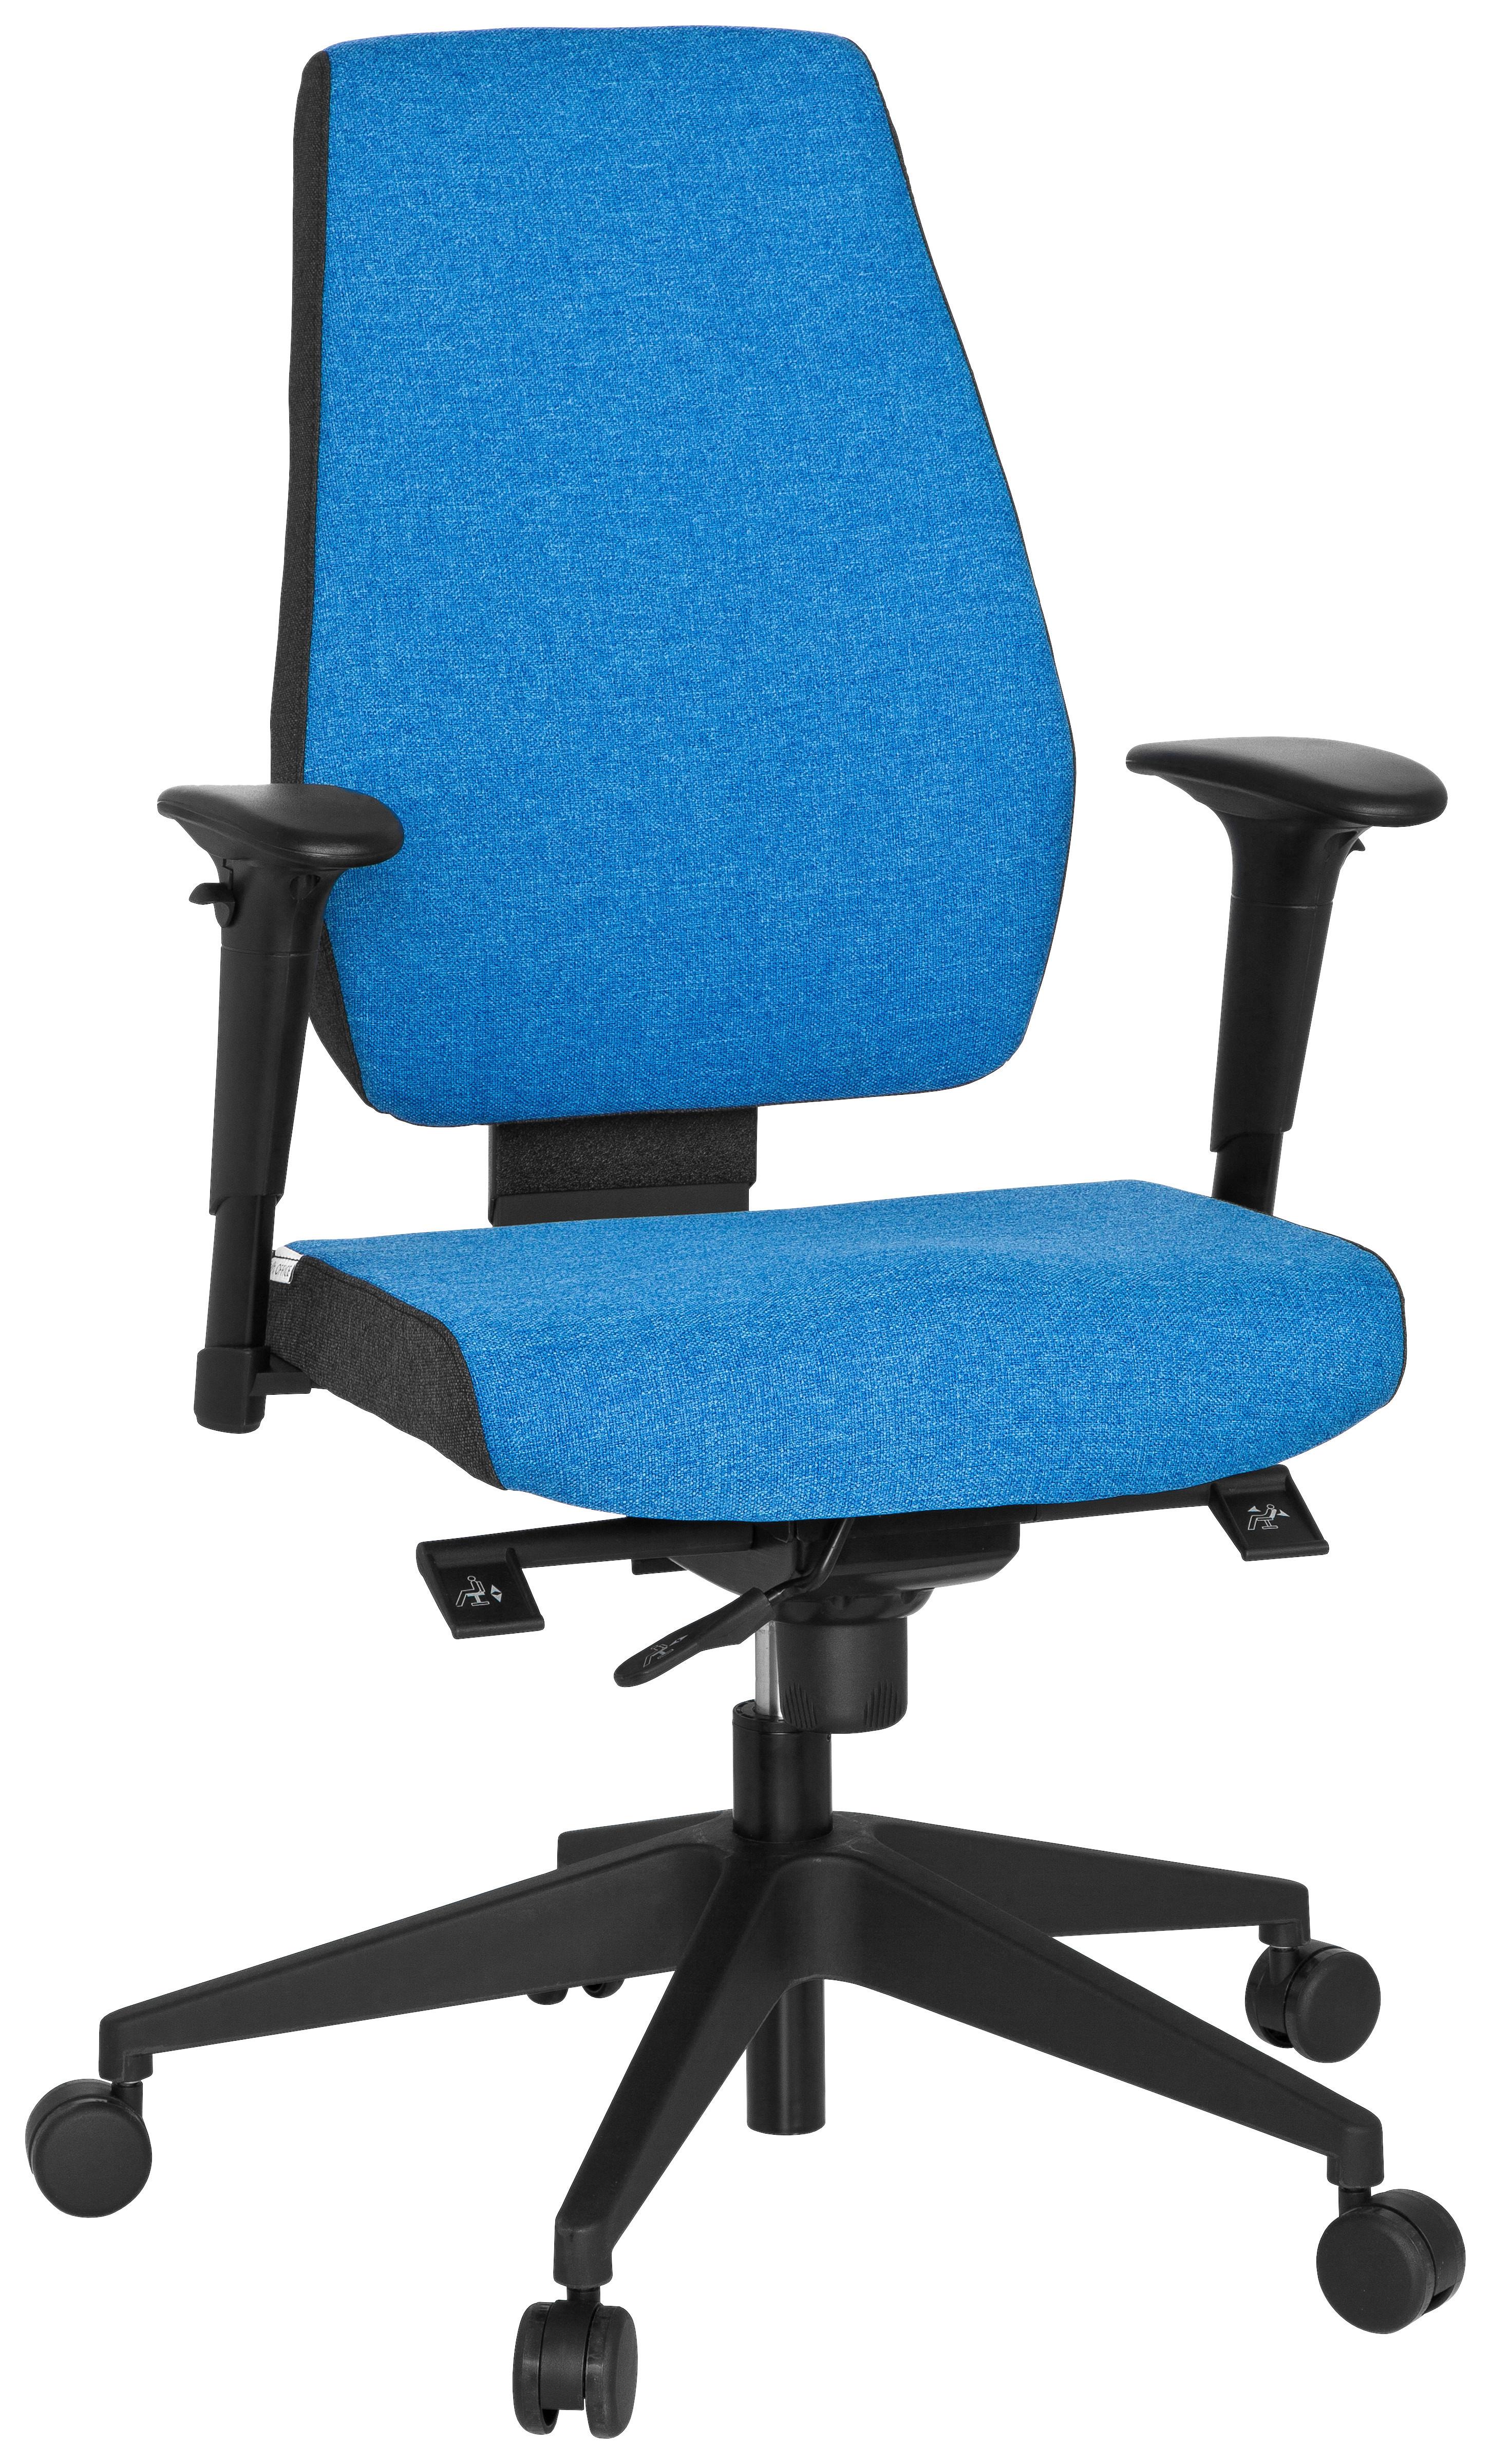 Drehstuhl Pro-Tec 500 Blau - Blau/Dunkelgrau, MODERN, Kunststoff/Textil (56/123/47cm) - MID.YOU